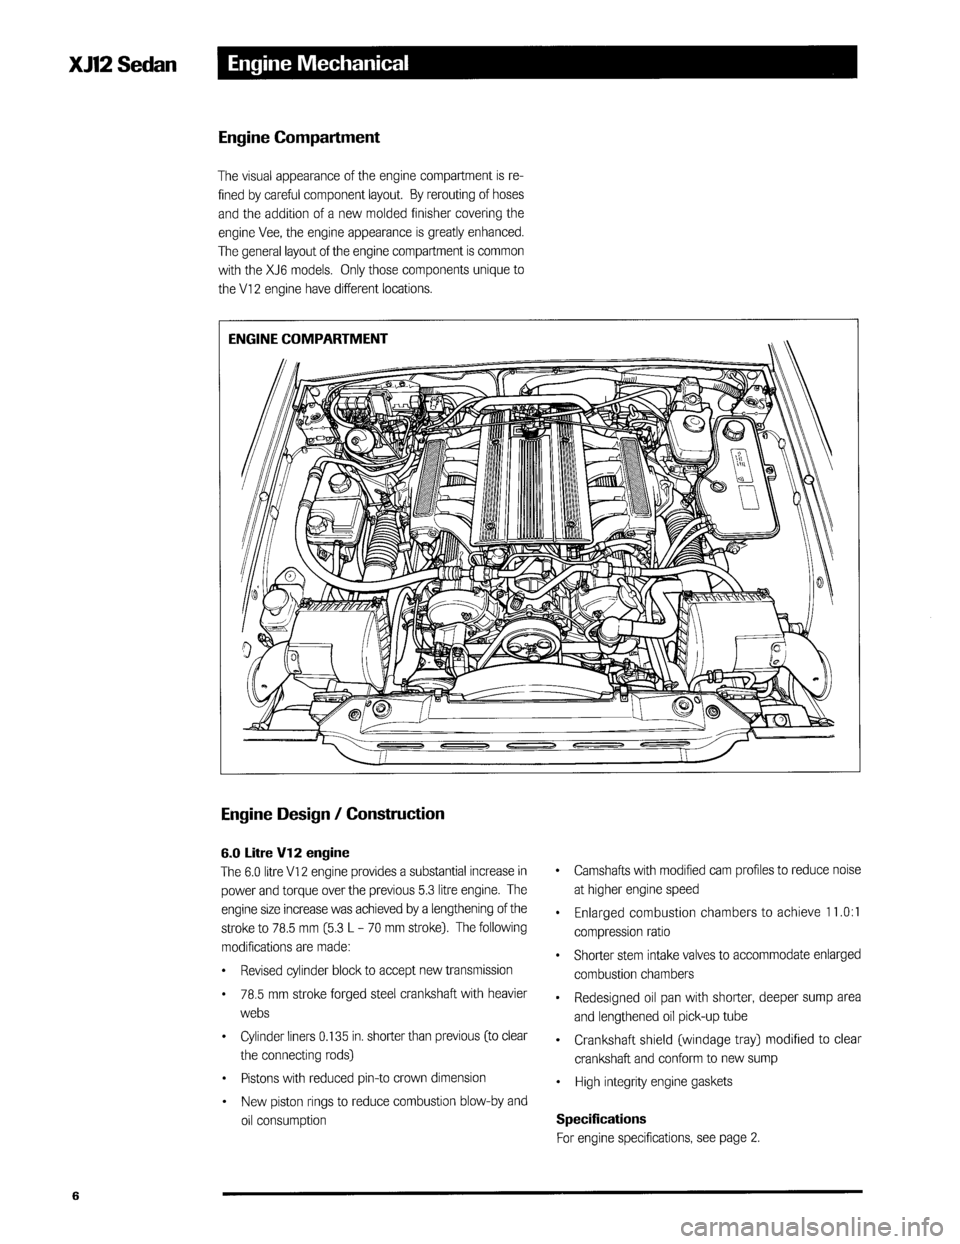 JAGUAR XJ12 1994 2.G Technical Information Manual 